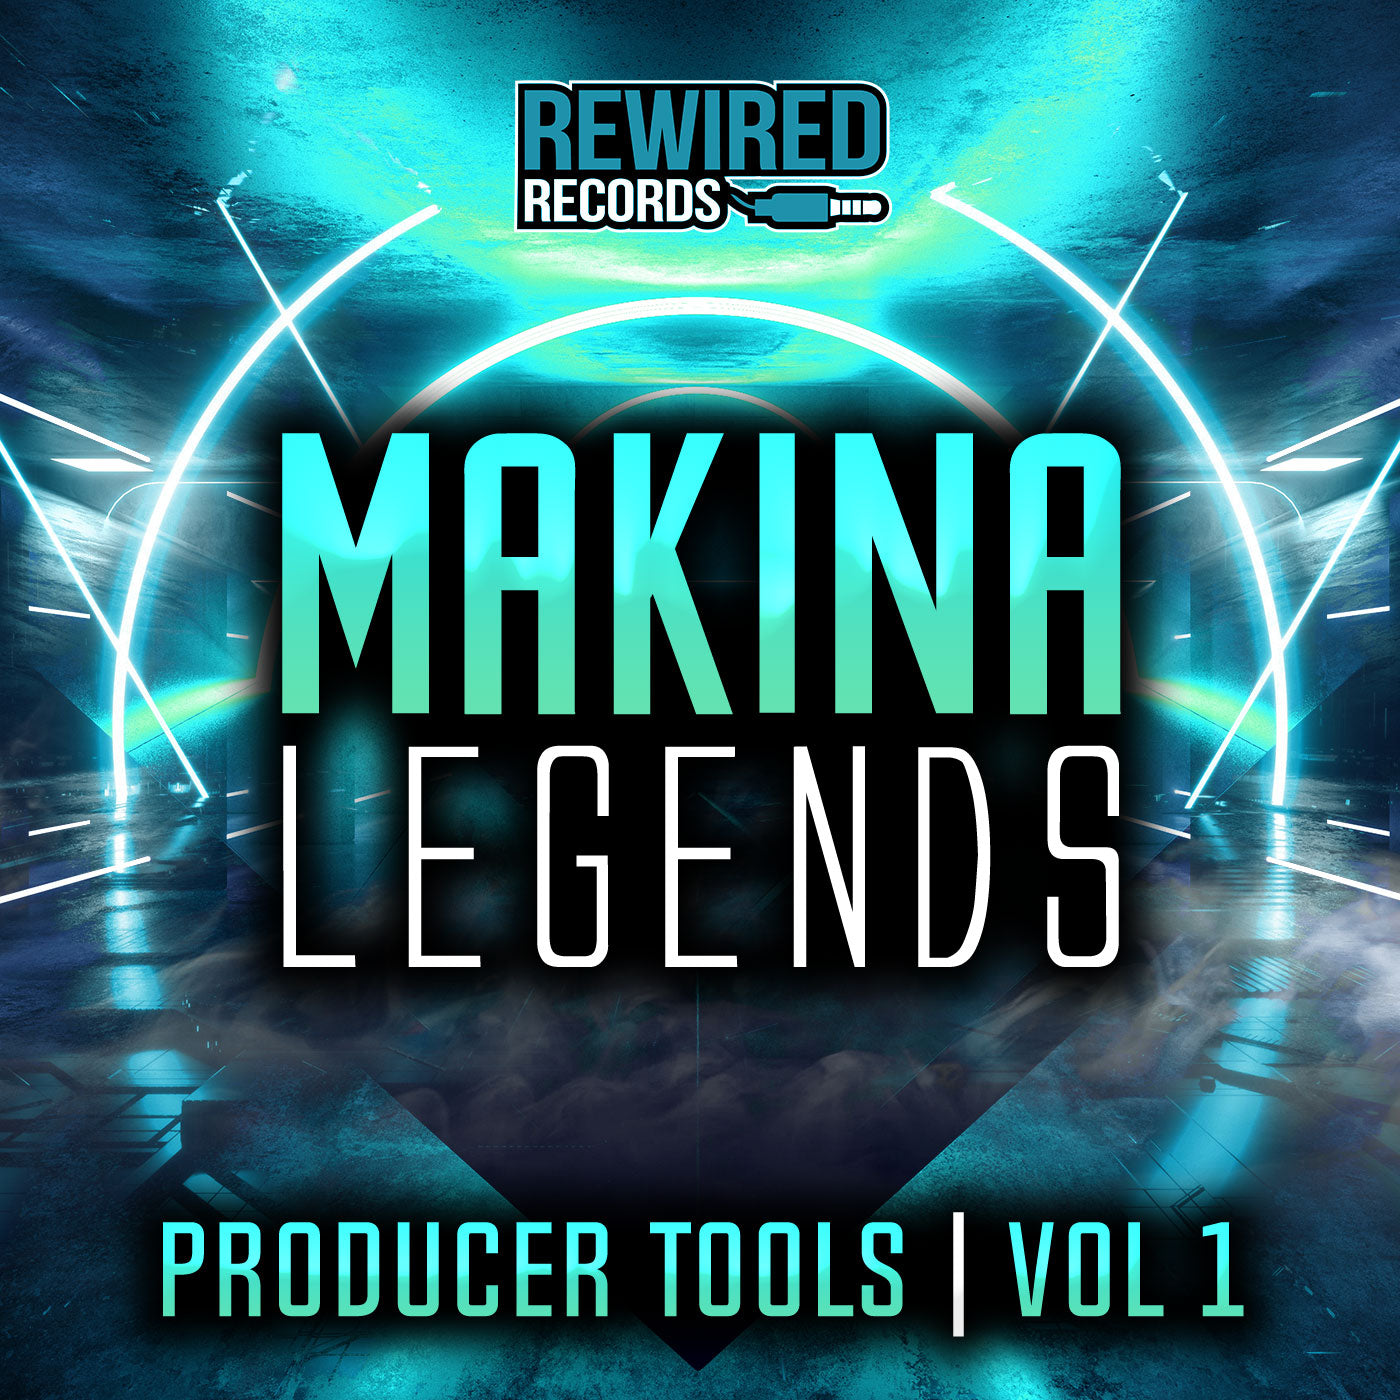 Makina Legends Vol 1 (Producer Tools) - Rewired Records